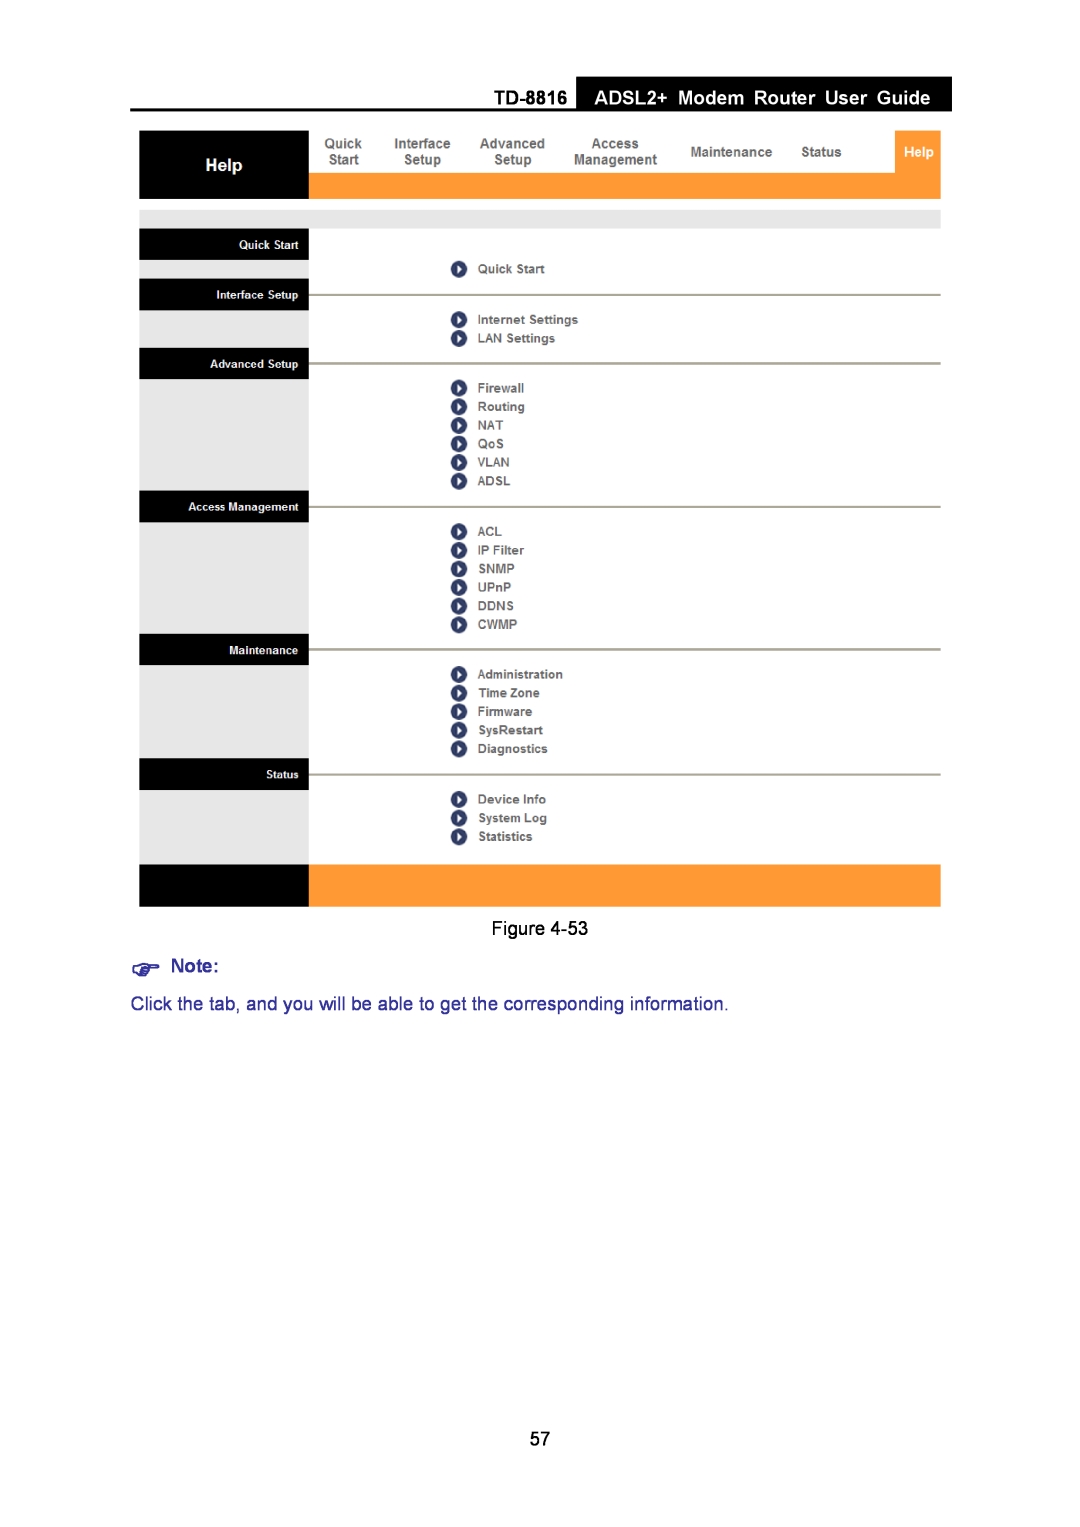 TP-Link TD-8816 manual ADSL2+ Modem Router User Guide,  Note 